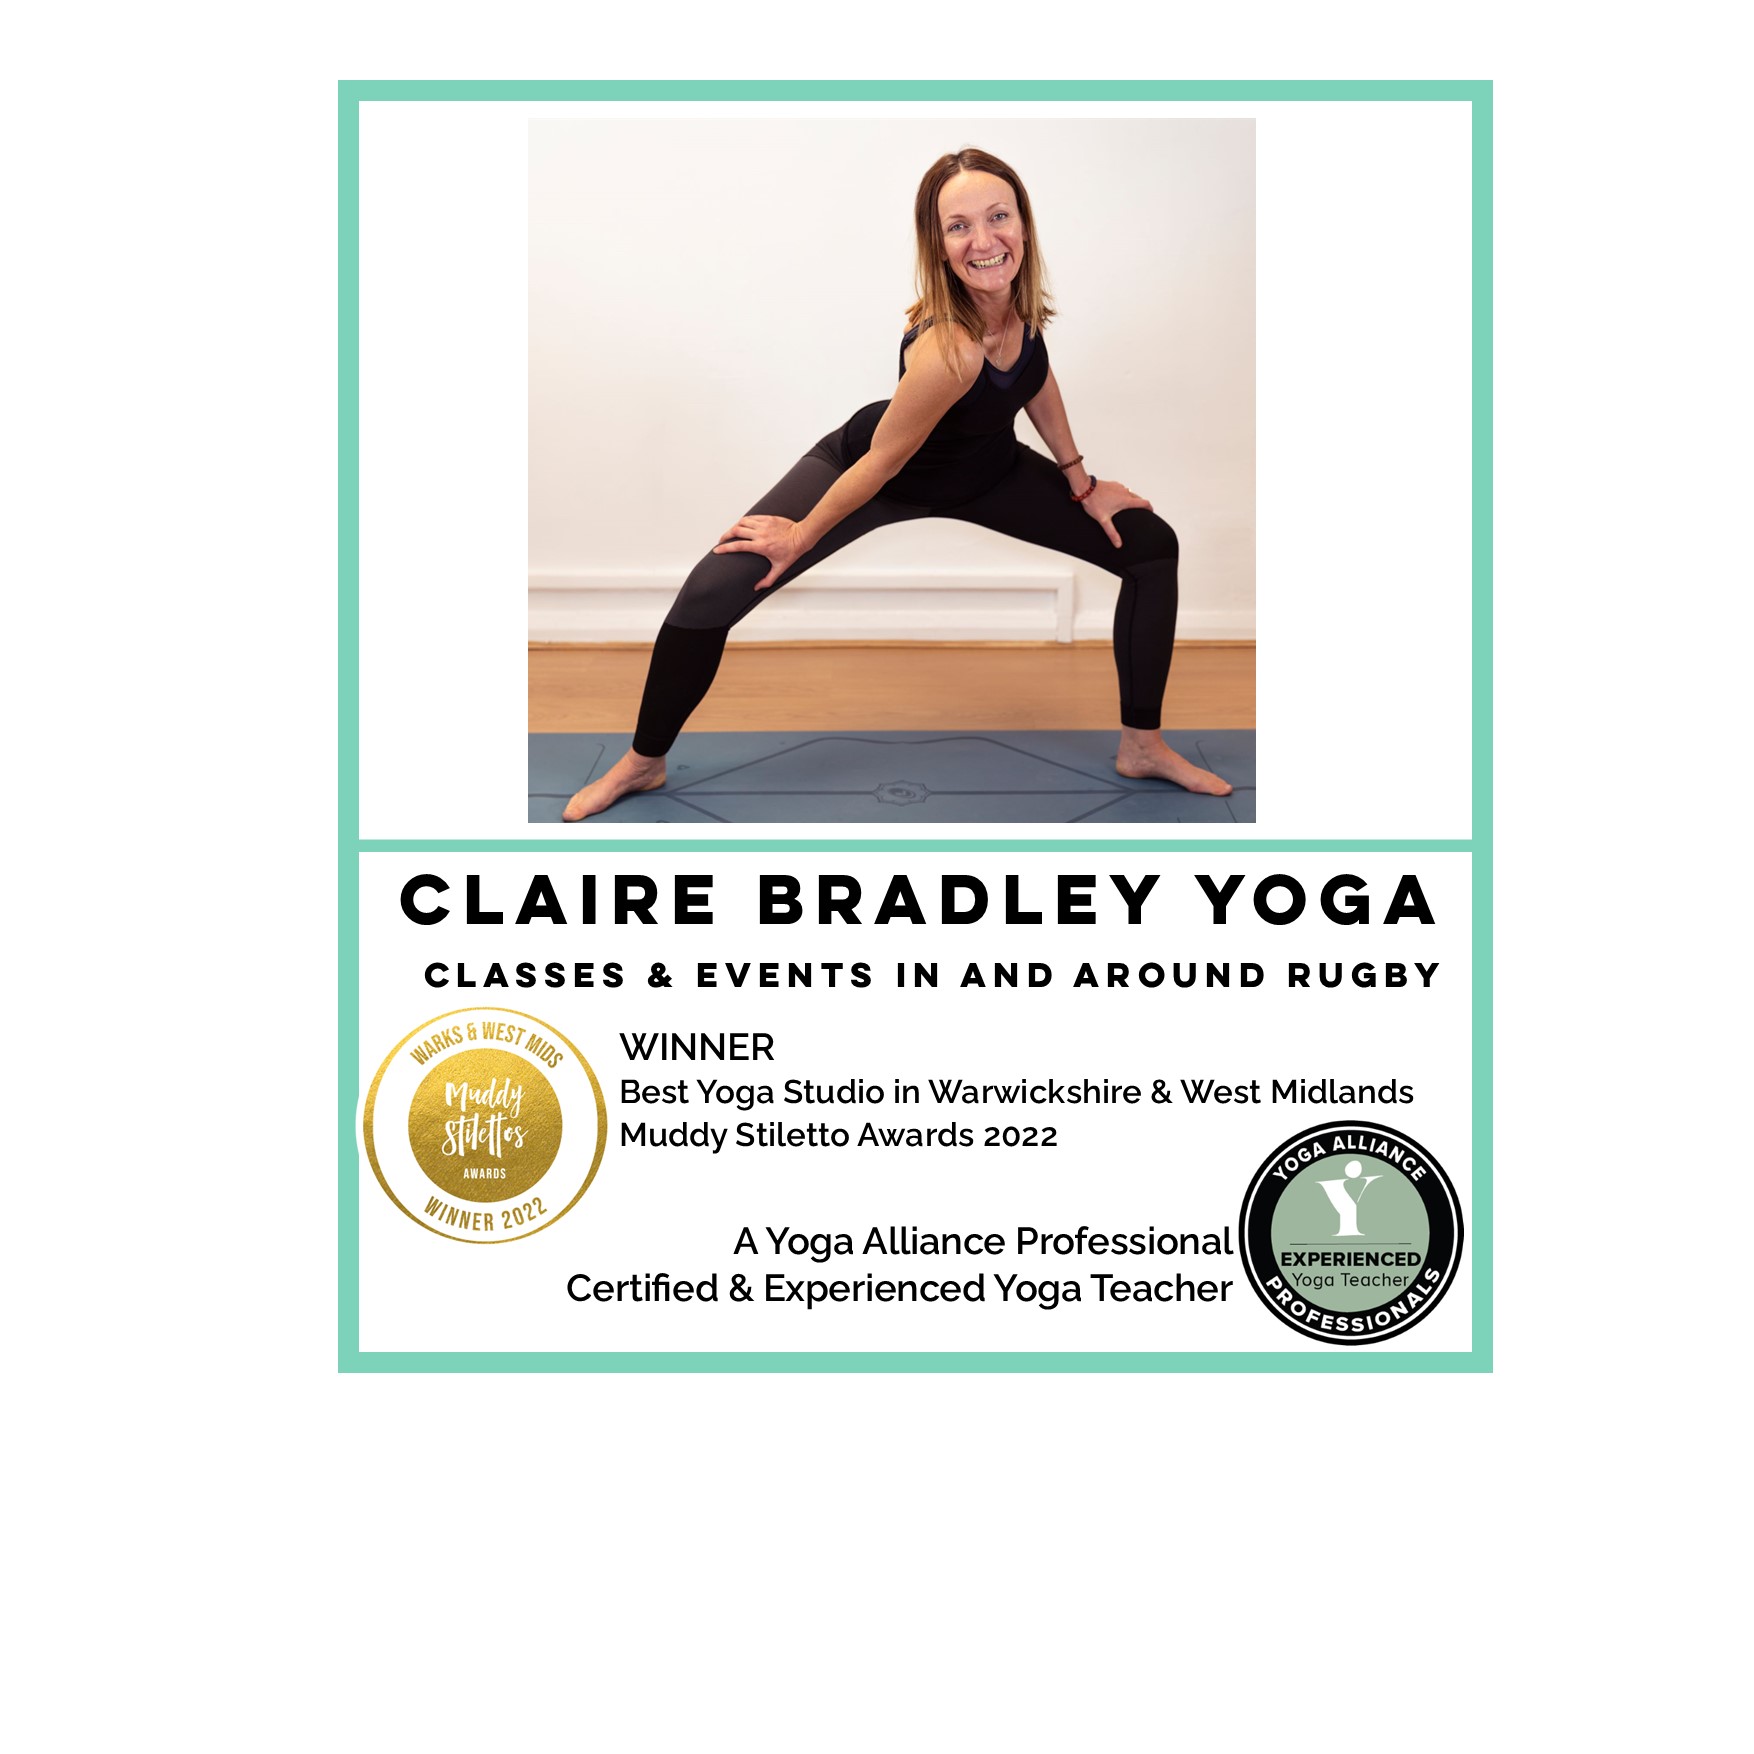 Claire Bradley Yoga's logo